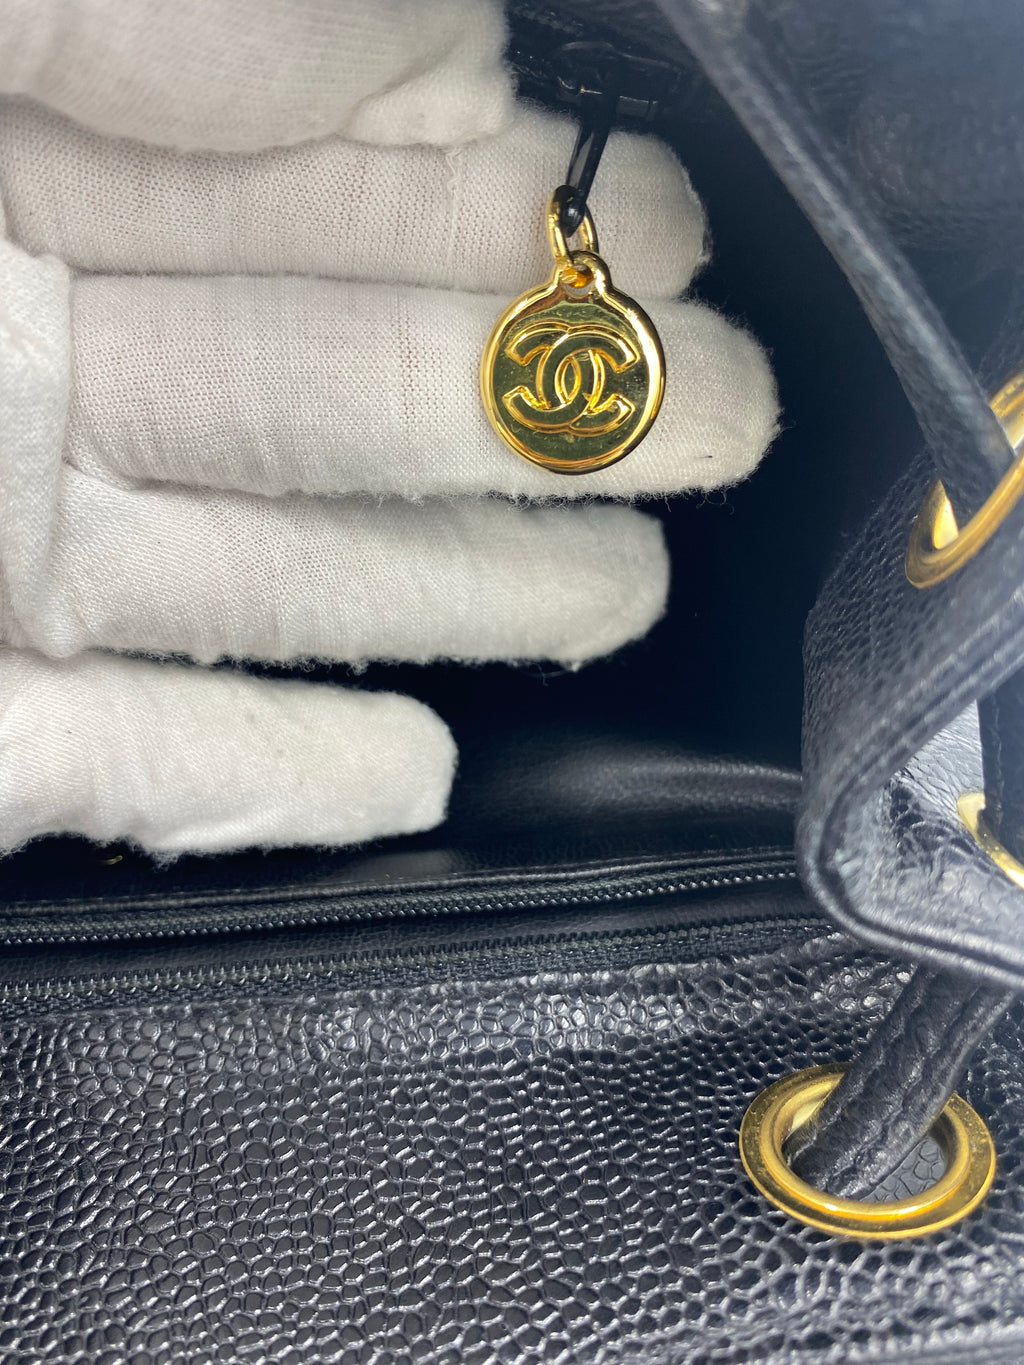 Chanel Vintage Caviar Leather Zip Bag